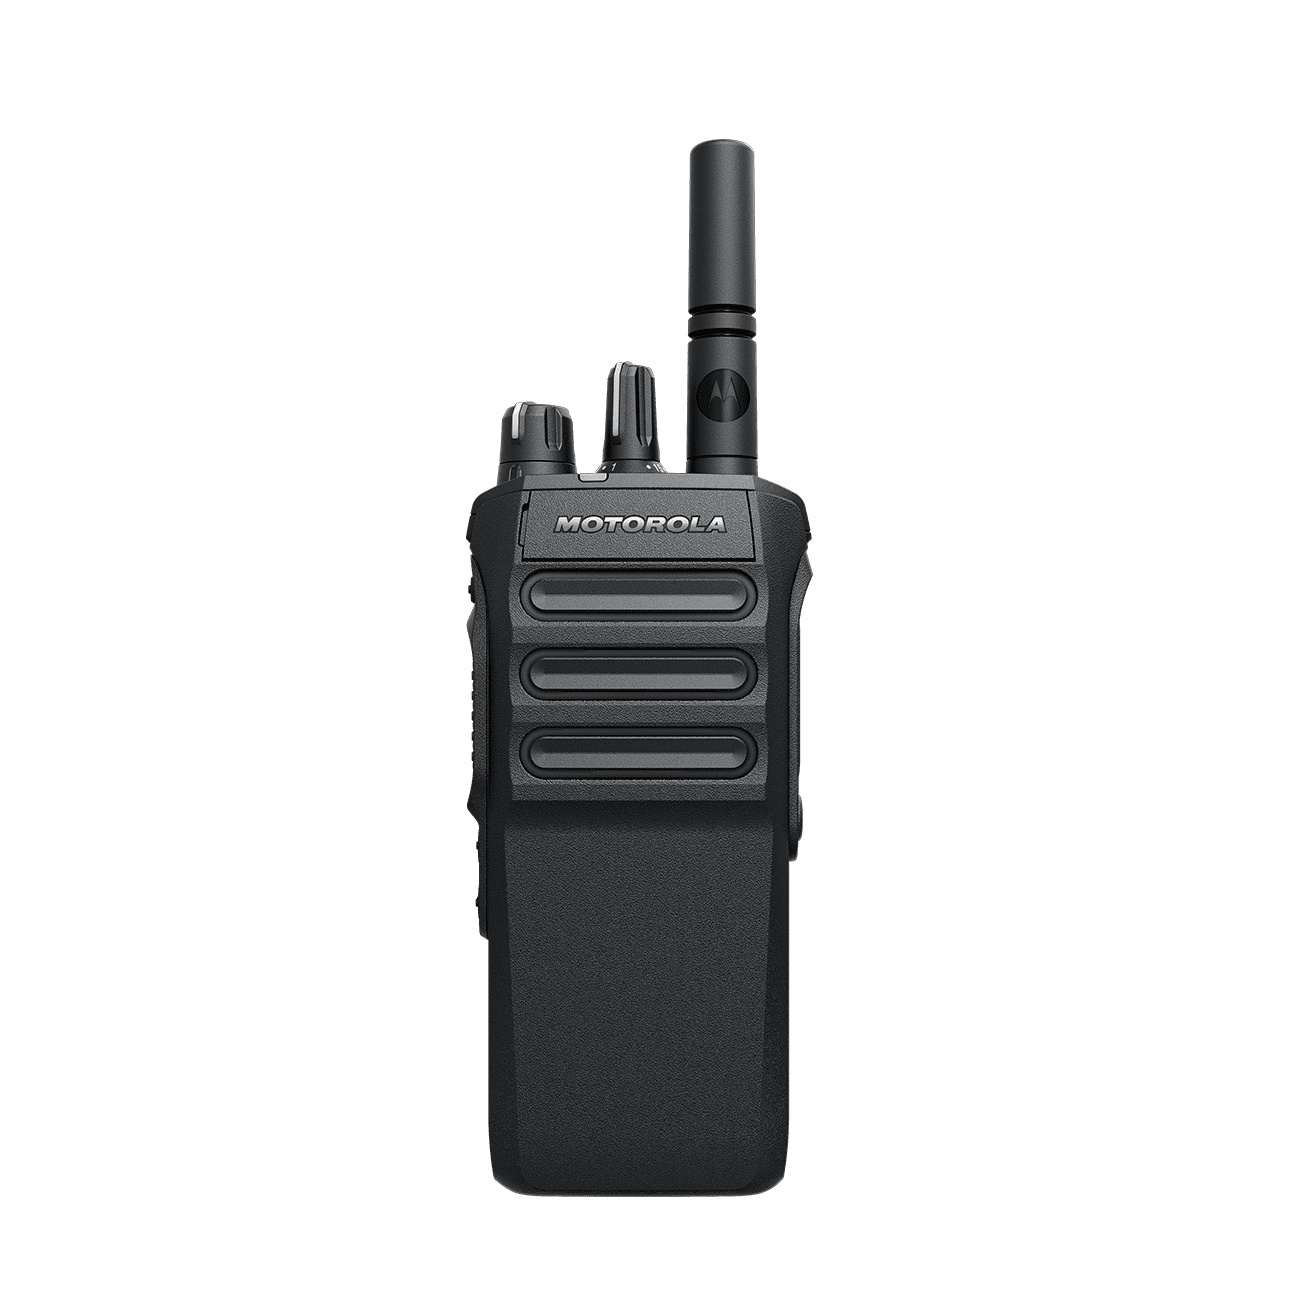 The MOTOTRBOTM R7 portable two-way radios